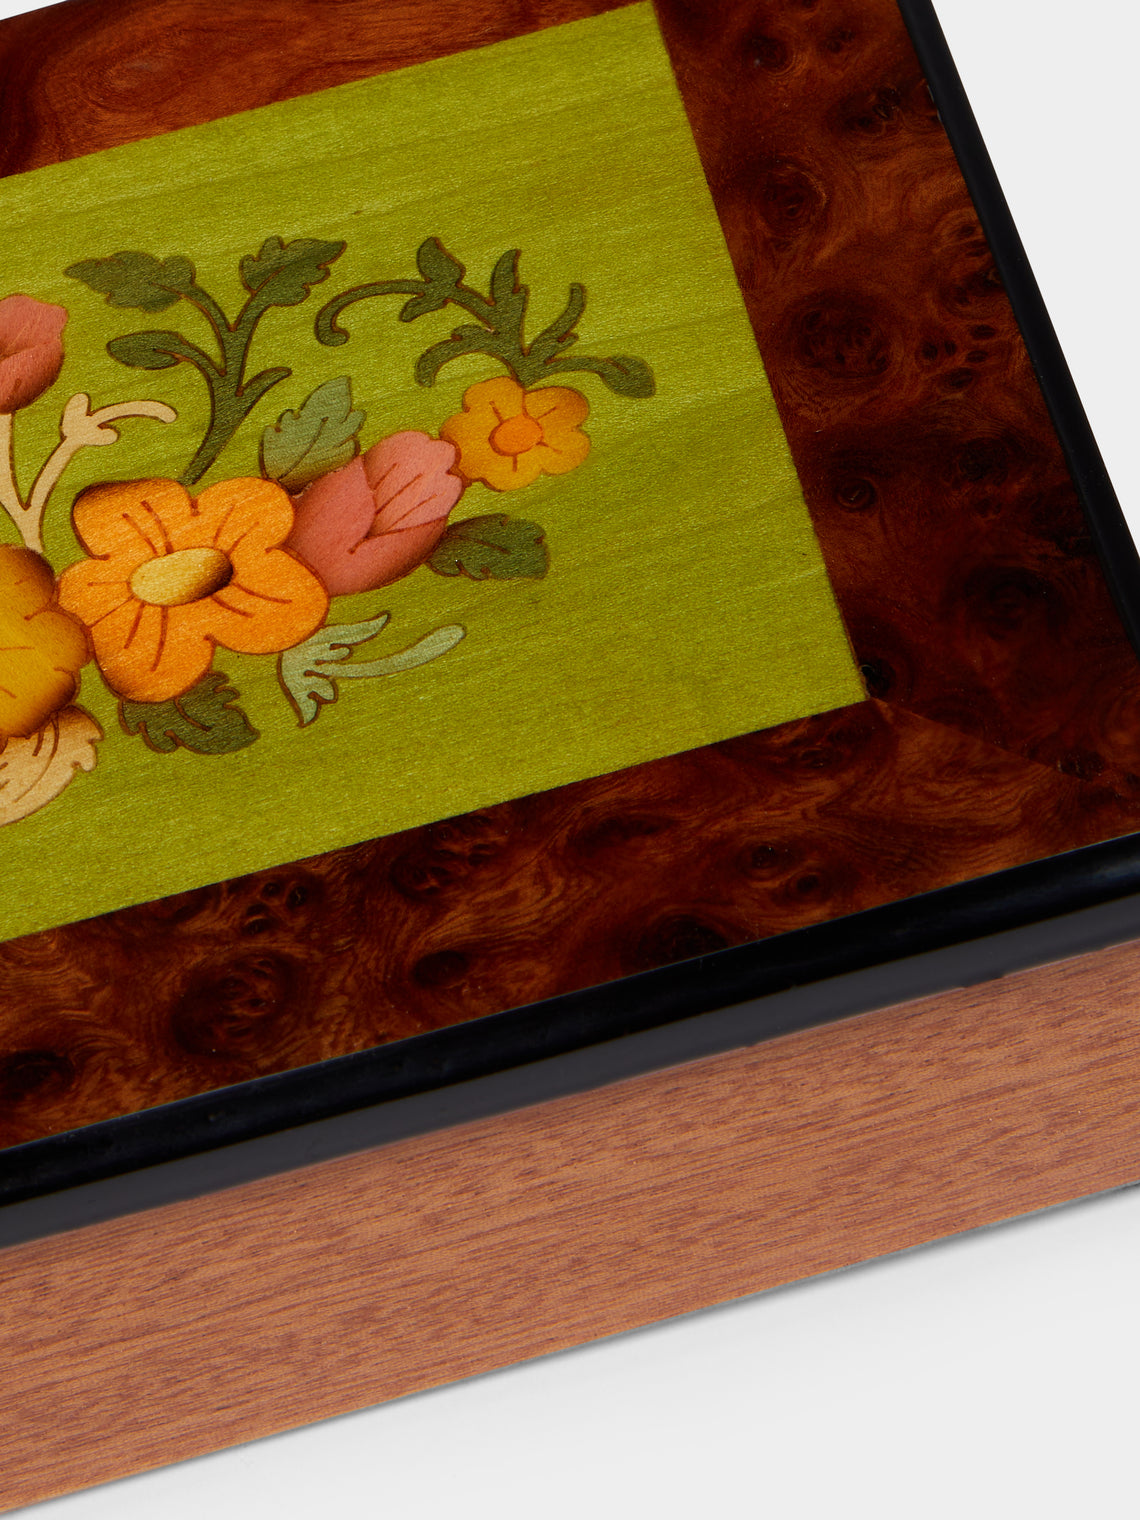 Biagio Barile - Flowers Wood Inlay Box -  - ABASK